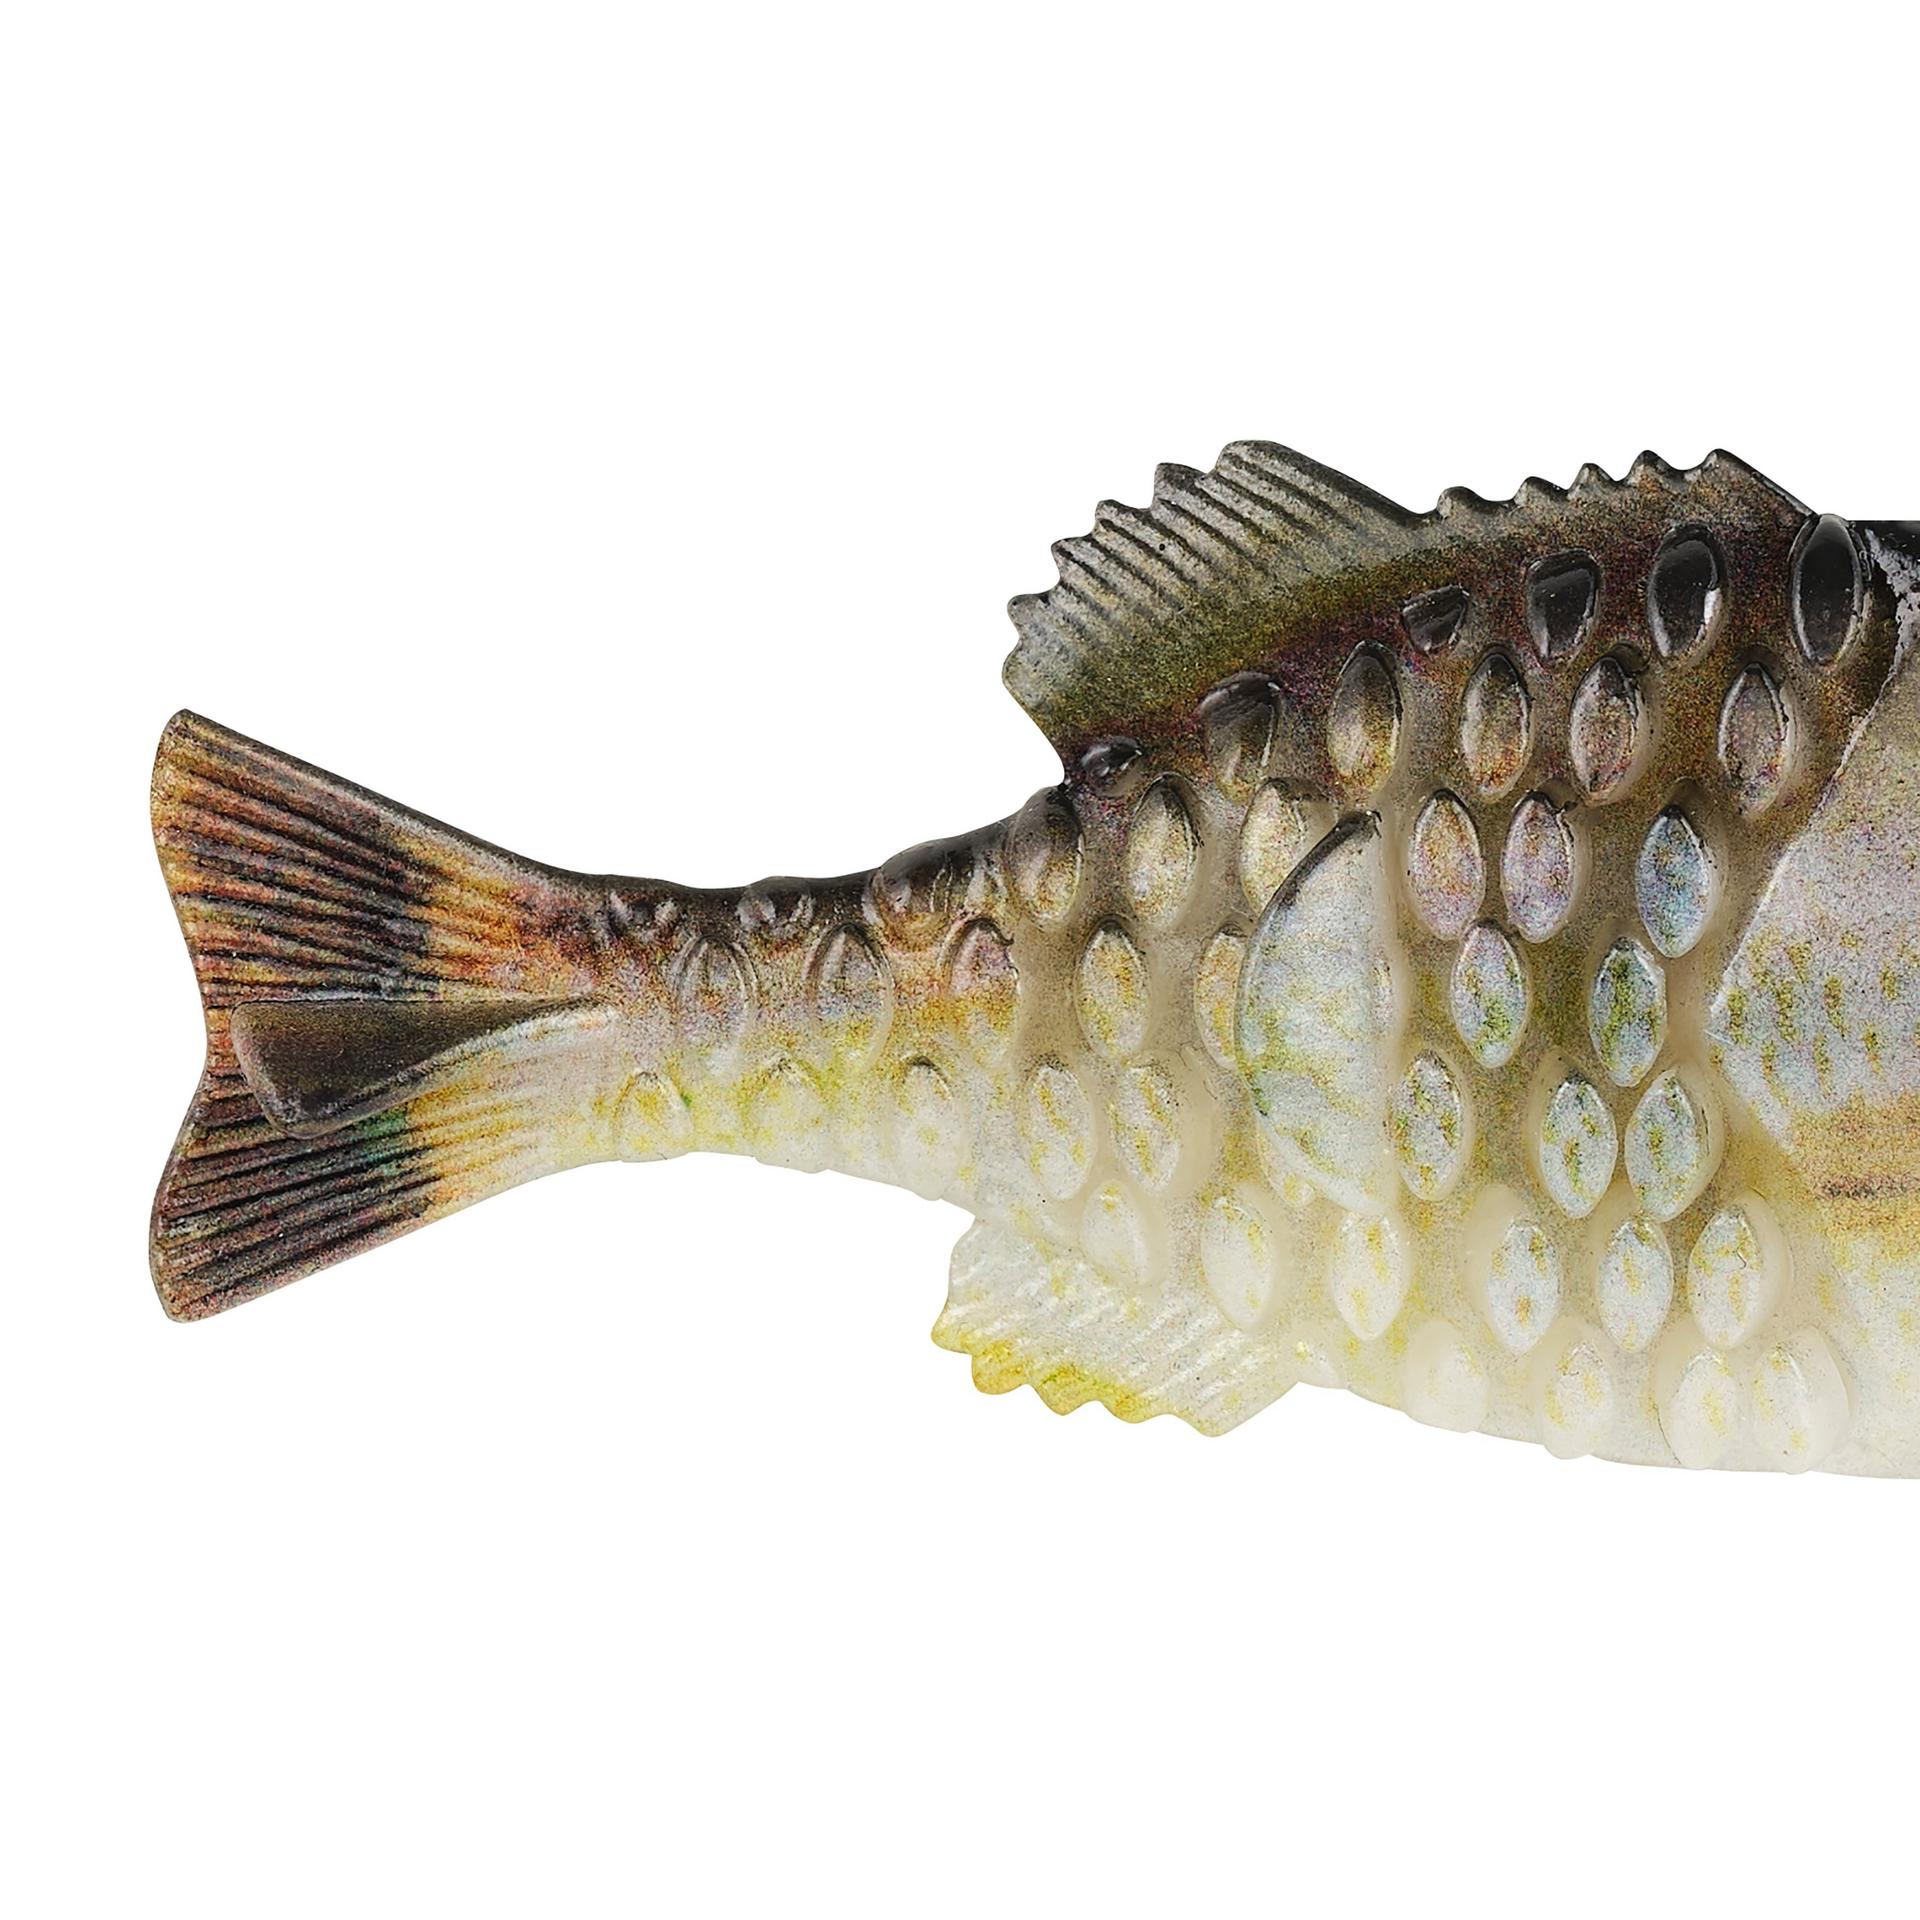 PowerBaitGilly HDSunfish alt2 | Berkley Fishing